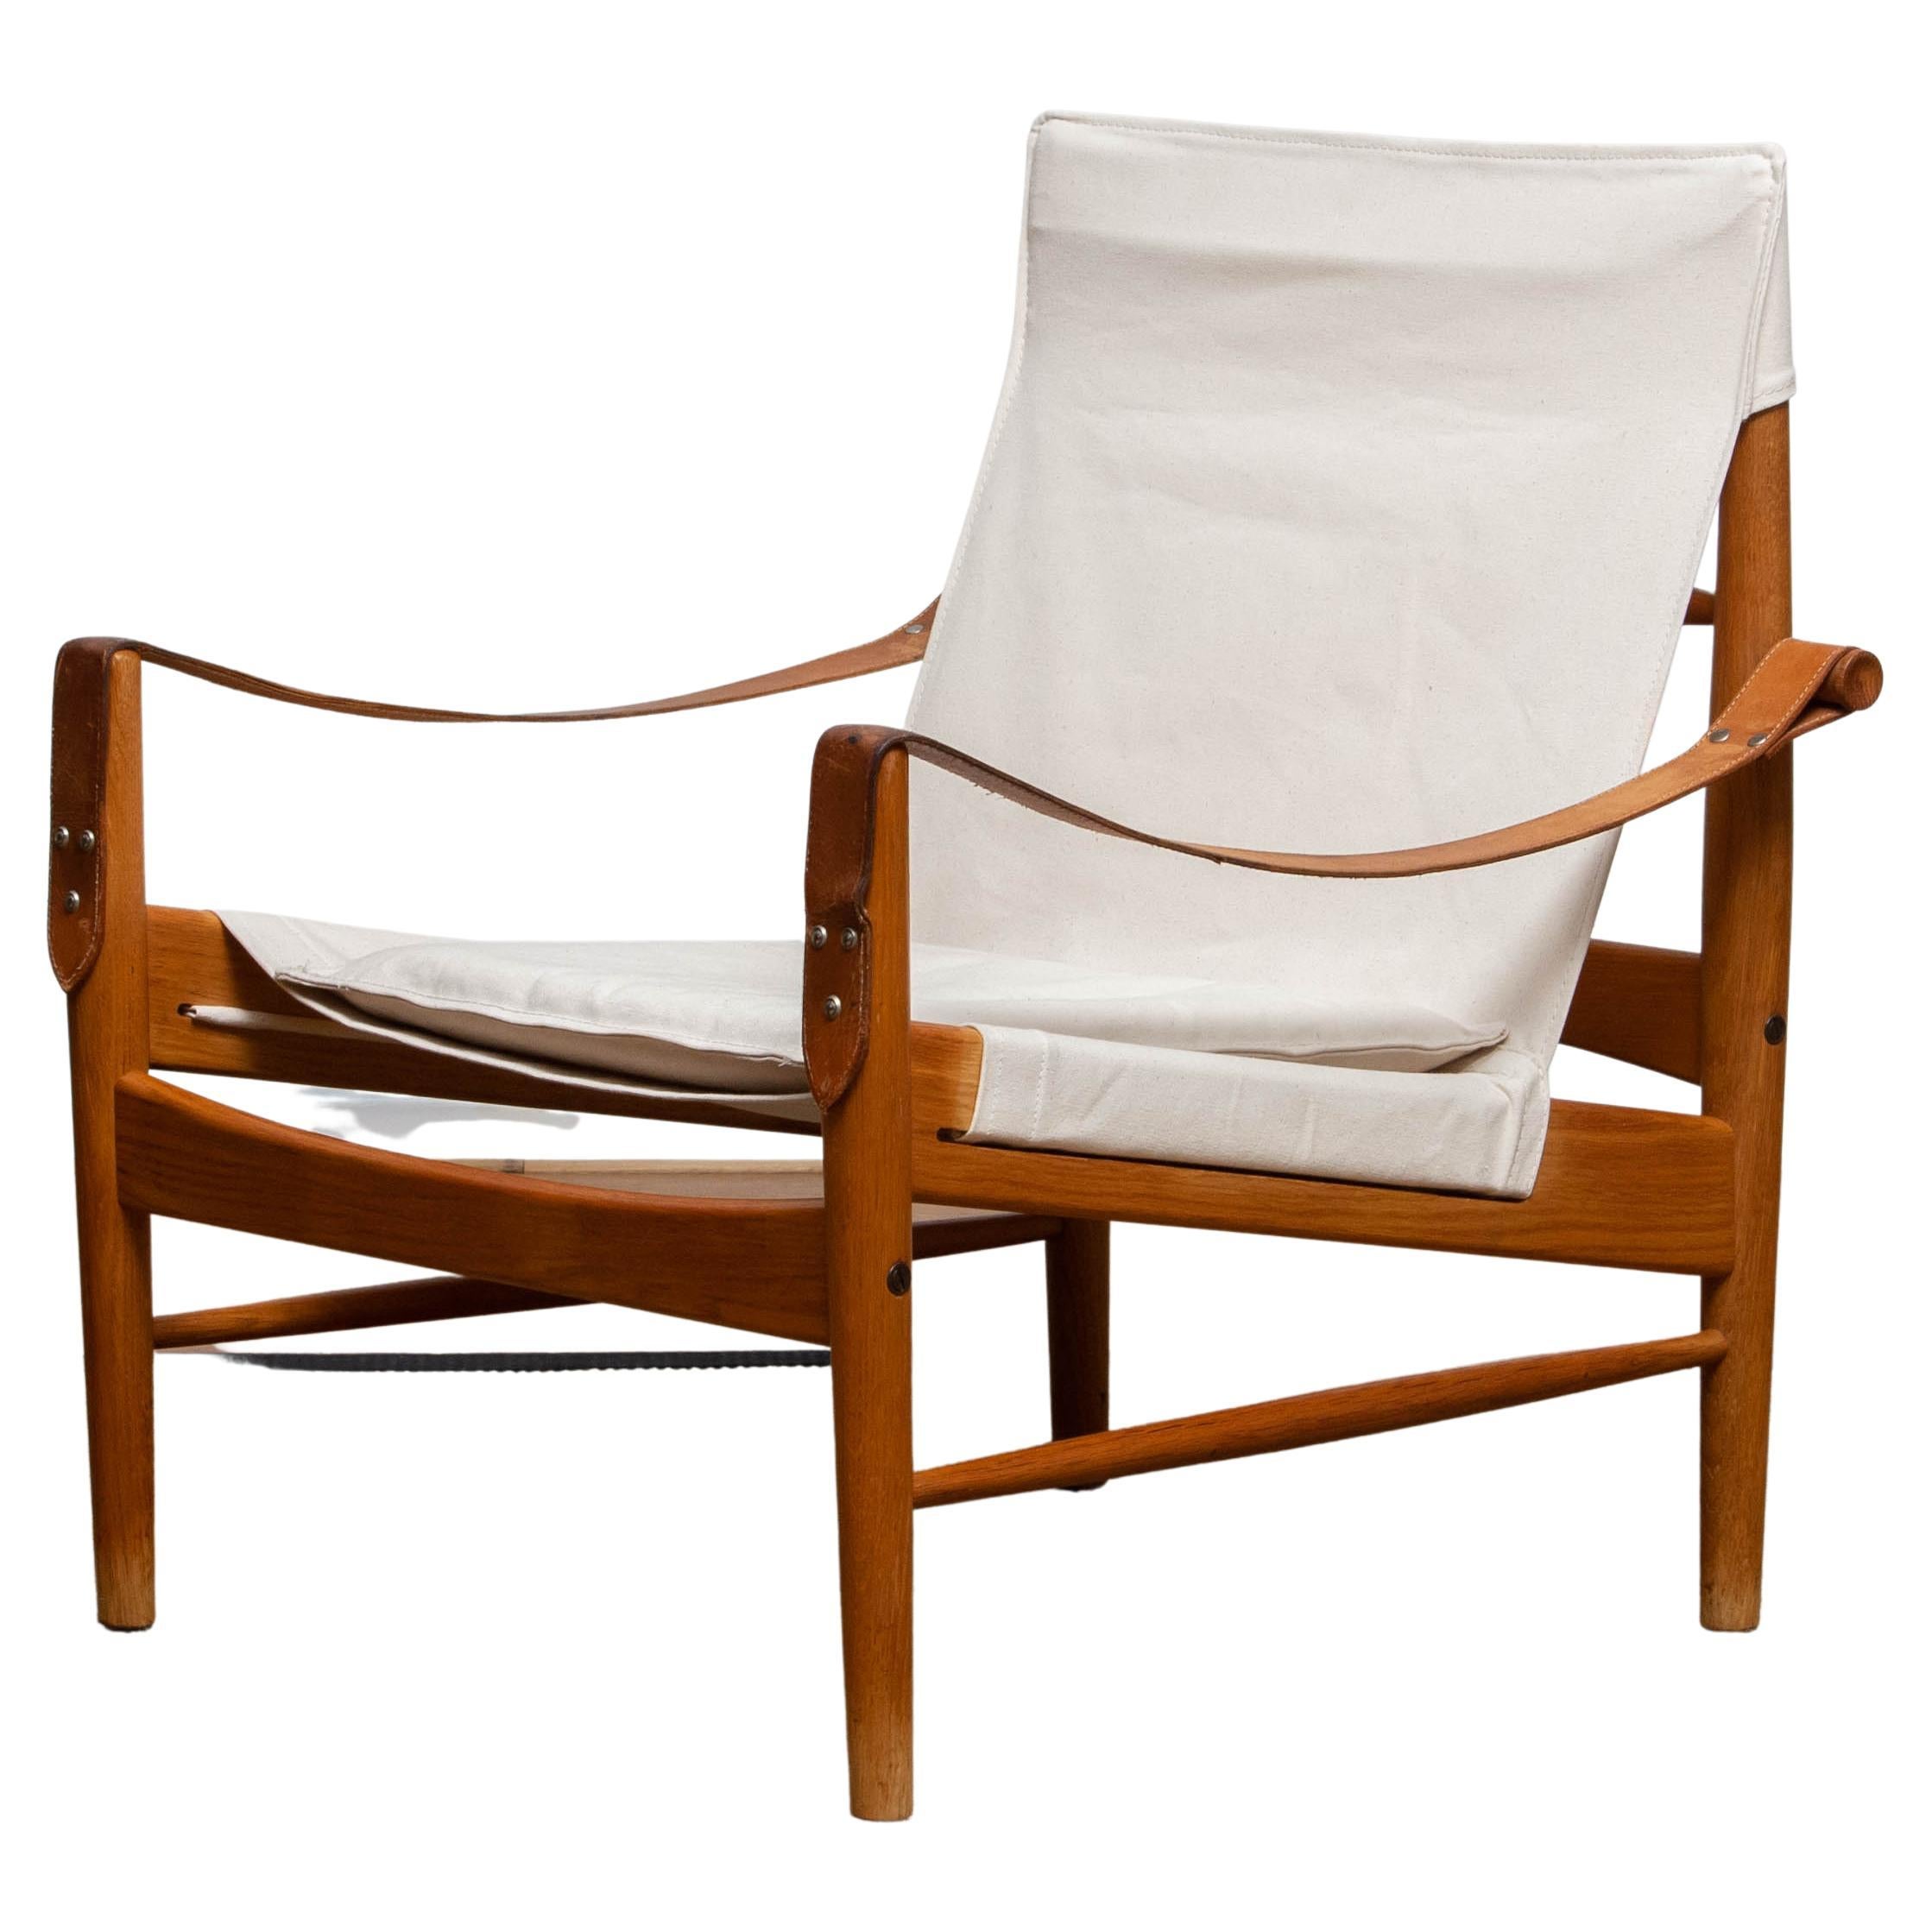 1960s, Safari Lounge Chair by Hans Olsen for Viska Möbler in Kinna, Sweden